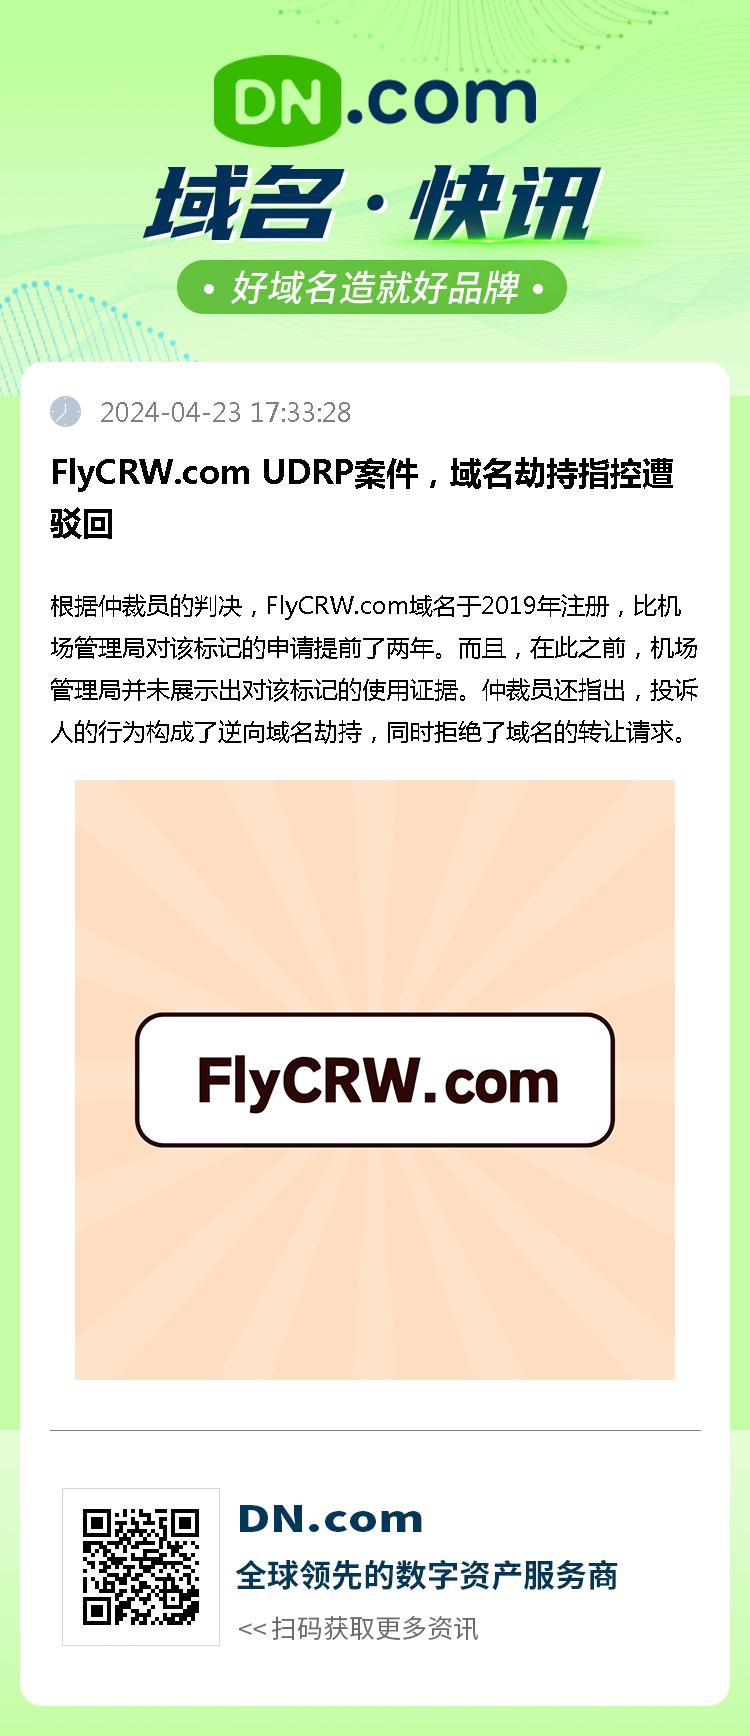 FlyCRW.com UDRP案件，域名劫持指控遭驳回